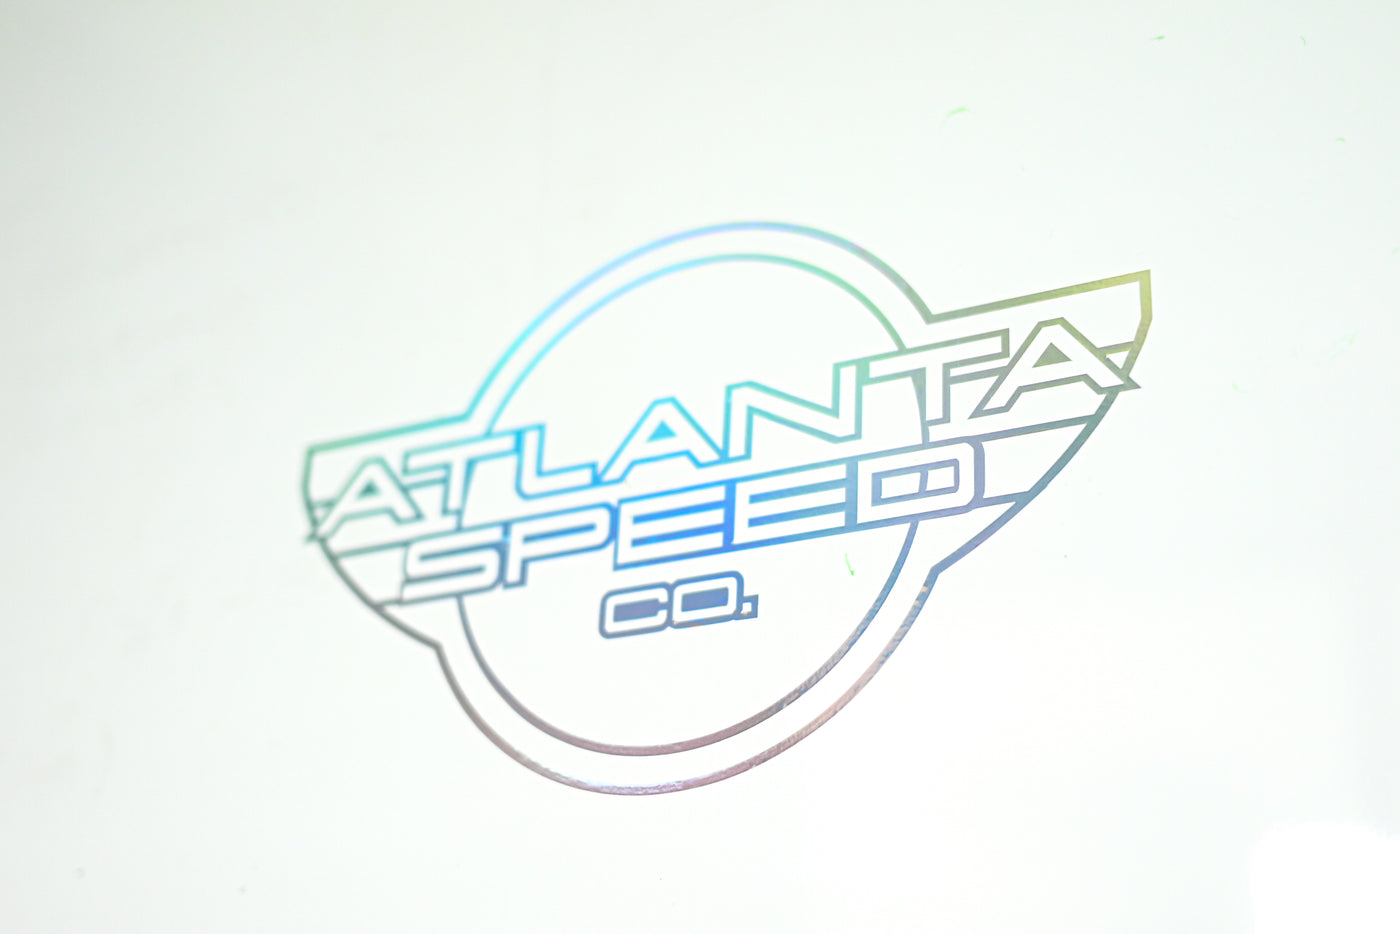 Atlanta Speed Company  Large Decal